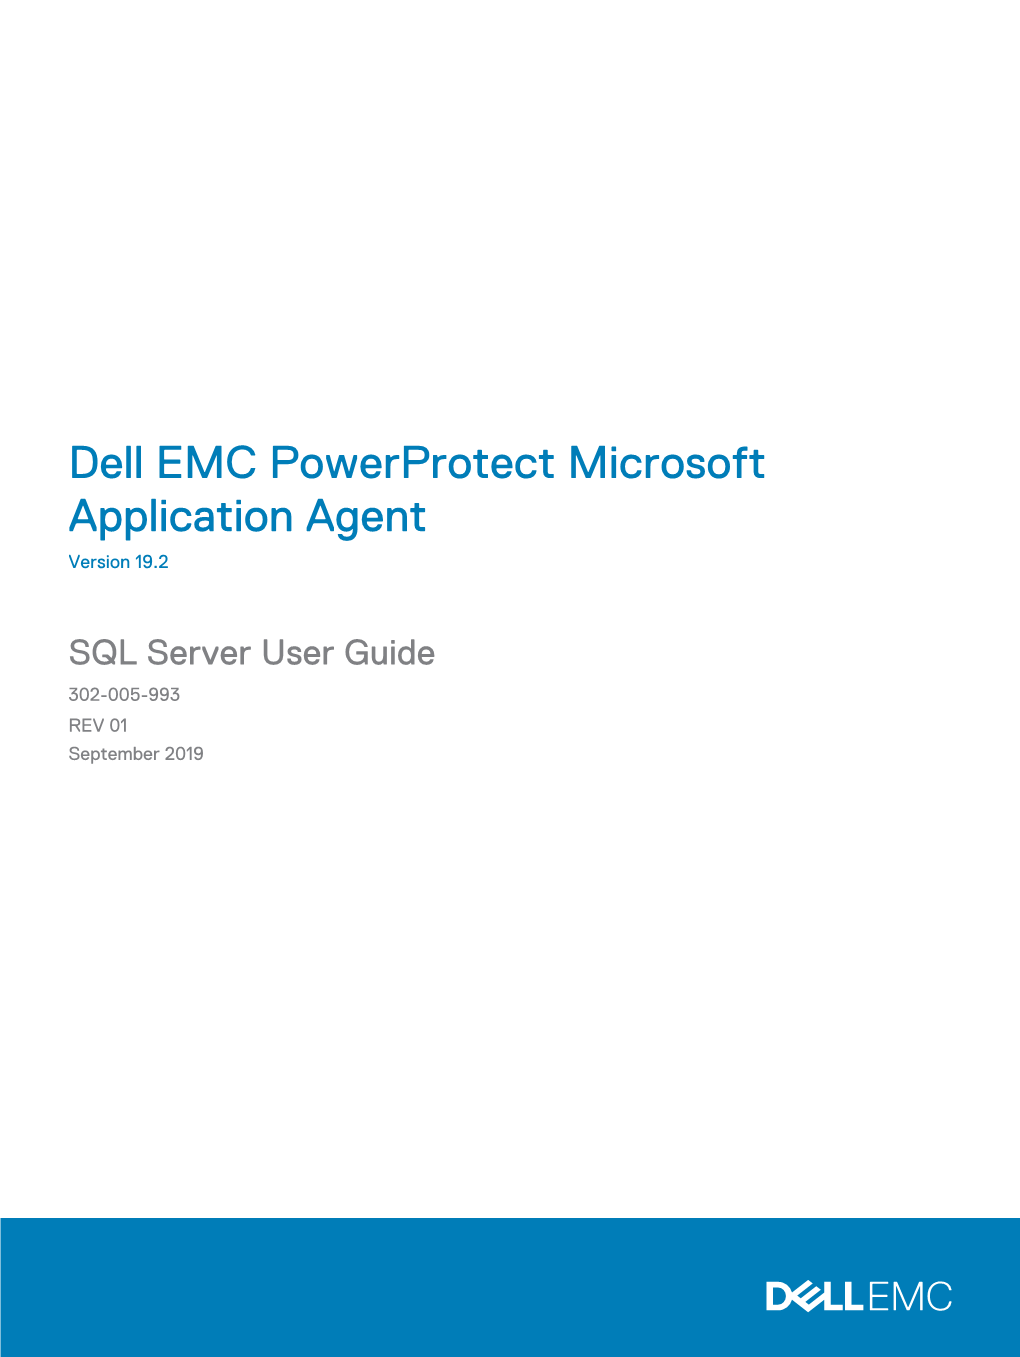 Dell EMC Powerprotect Microsoft Application Agent SQL Server User Guide CONTENTS